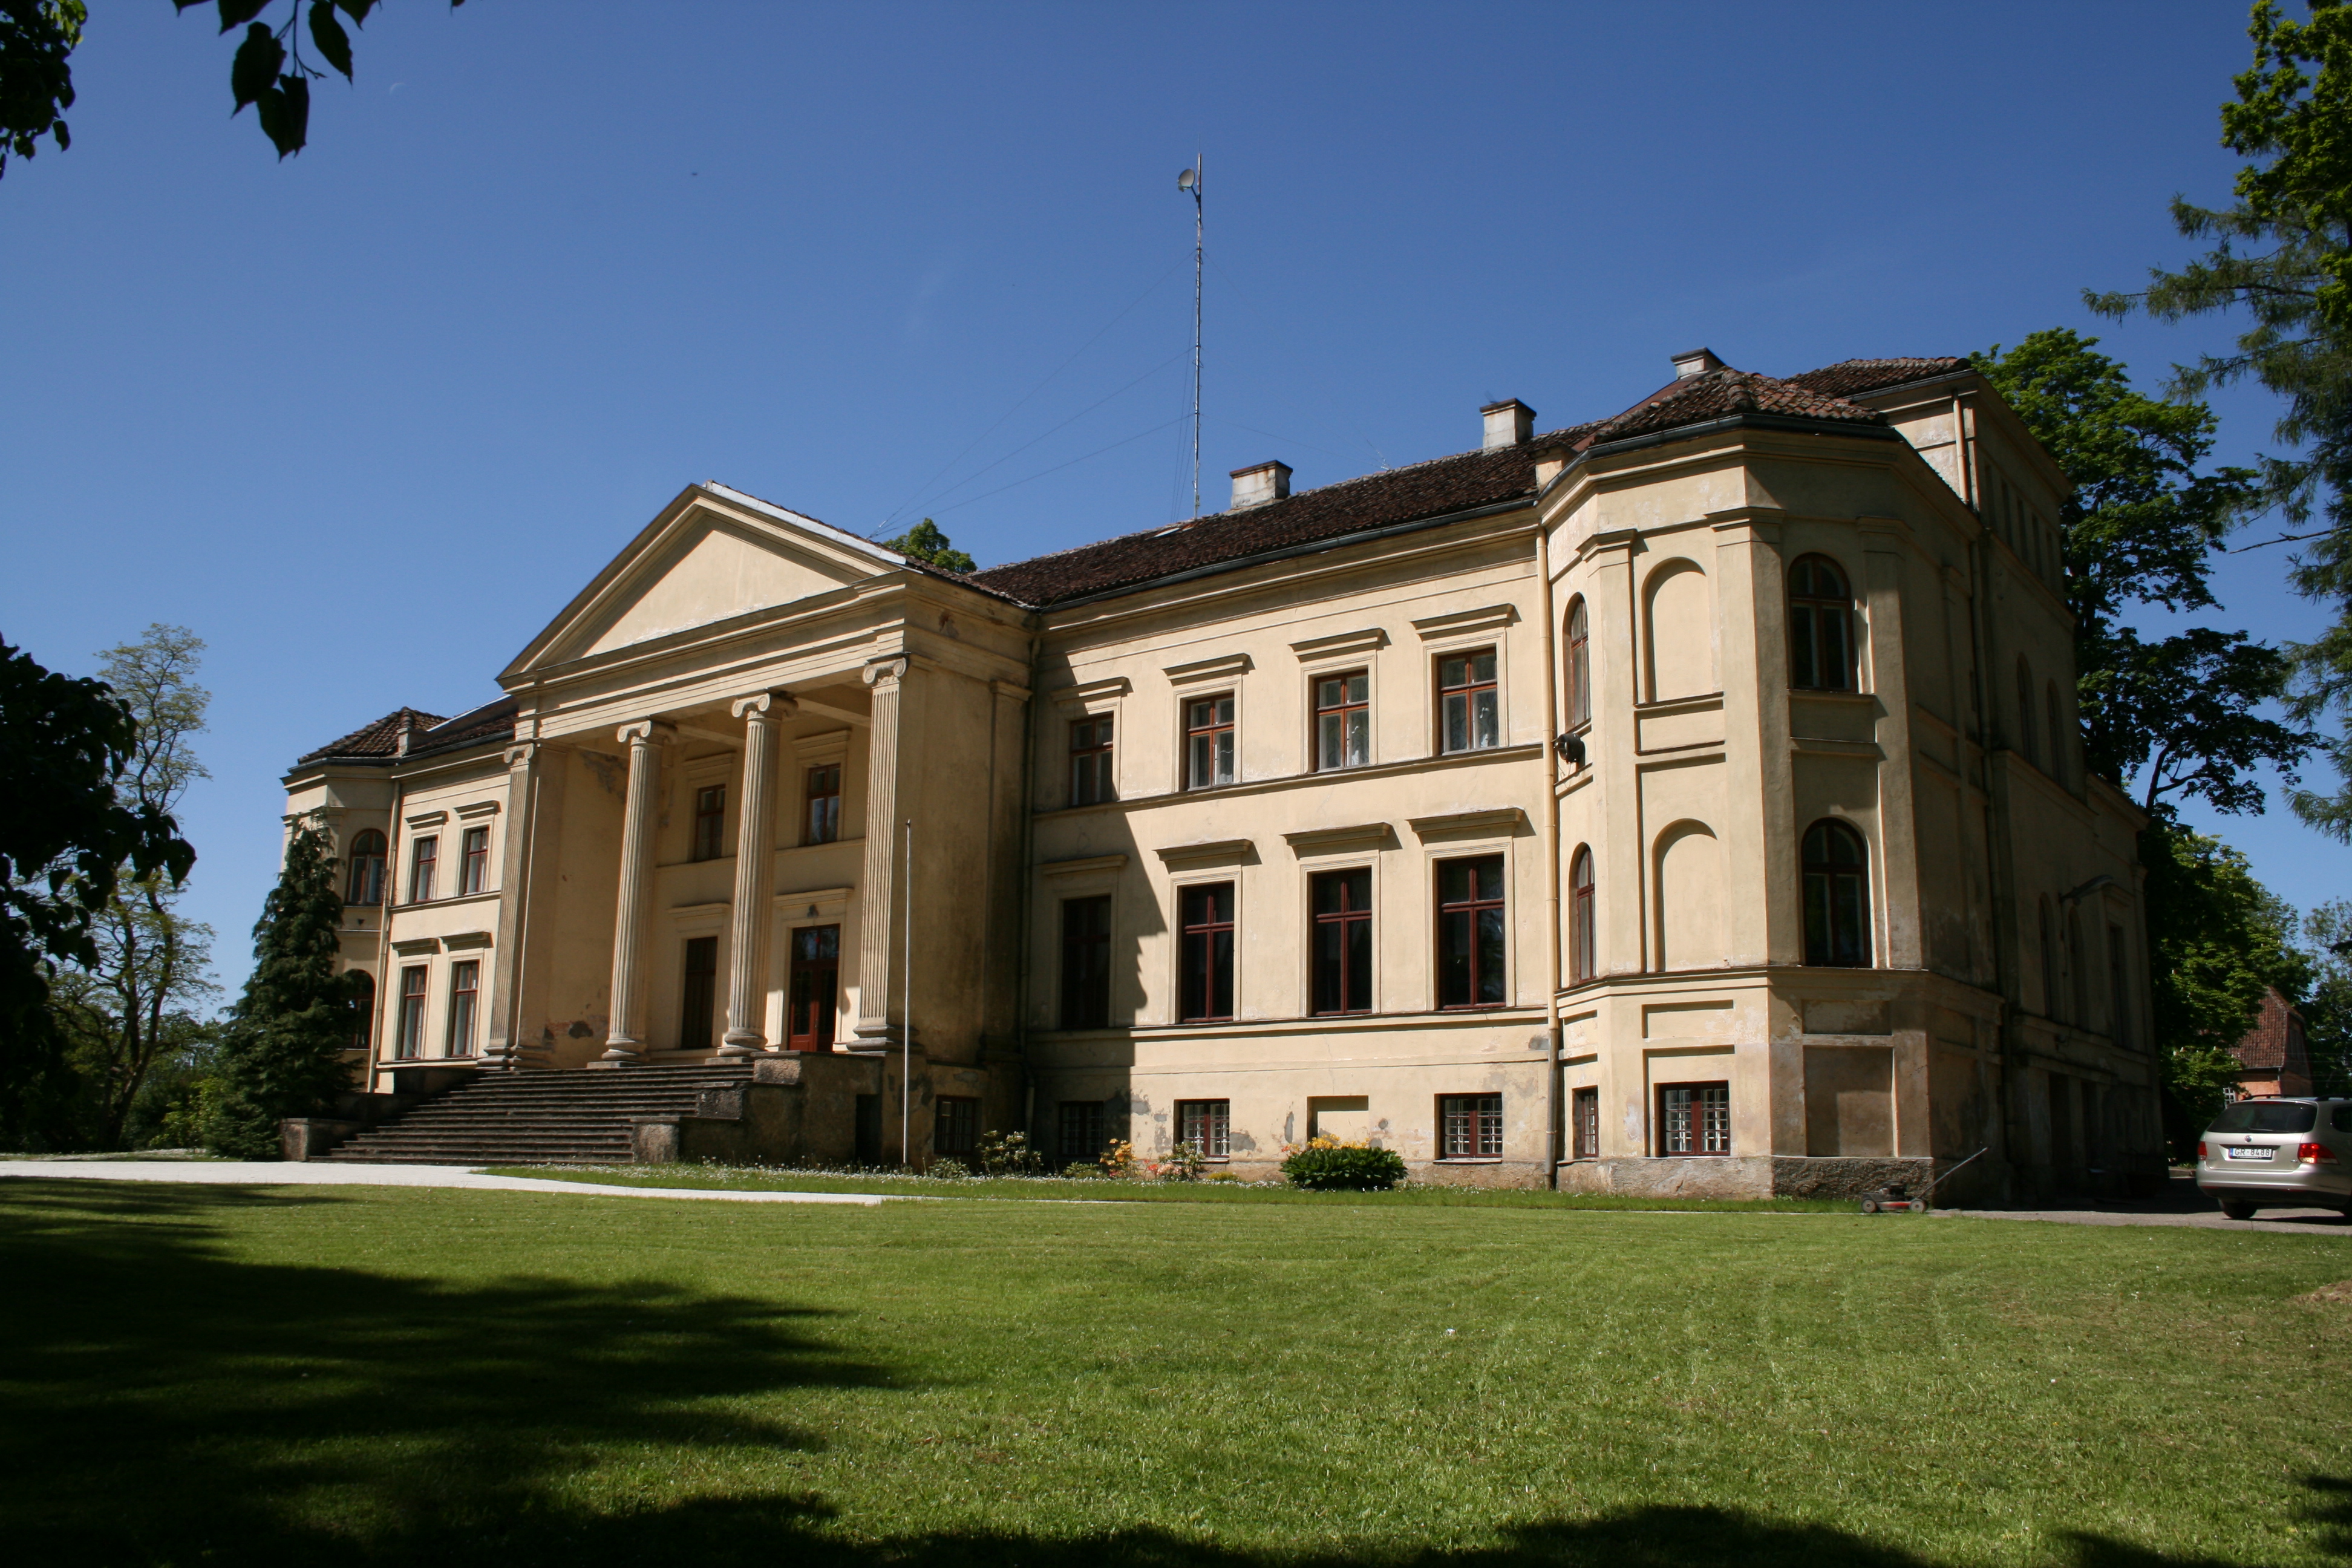 File:Ivande manor house (1).jpg - Wikimedia Commons